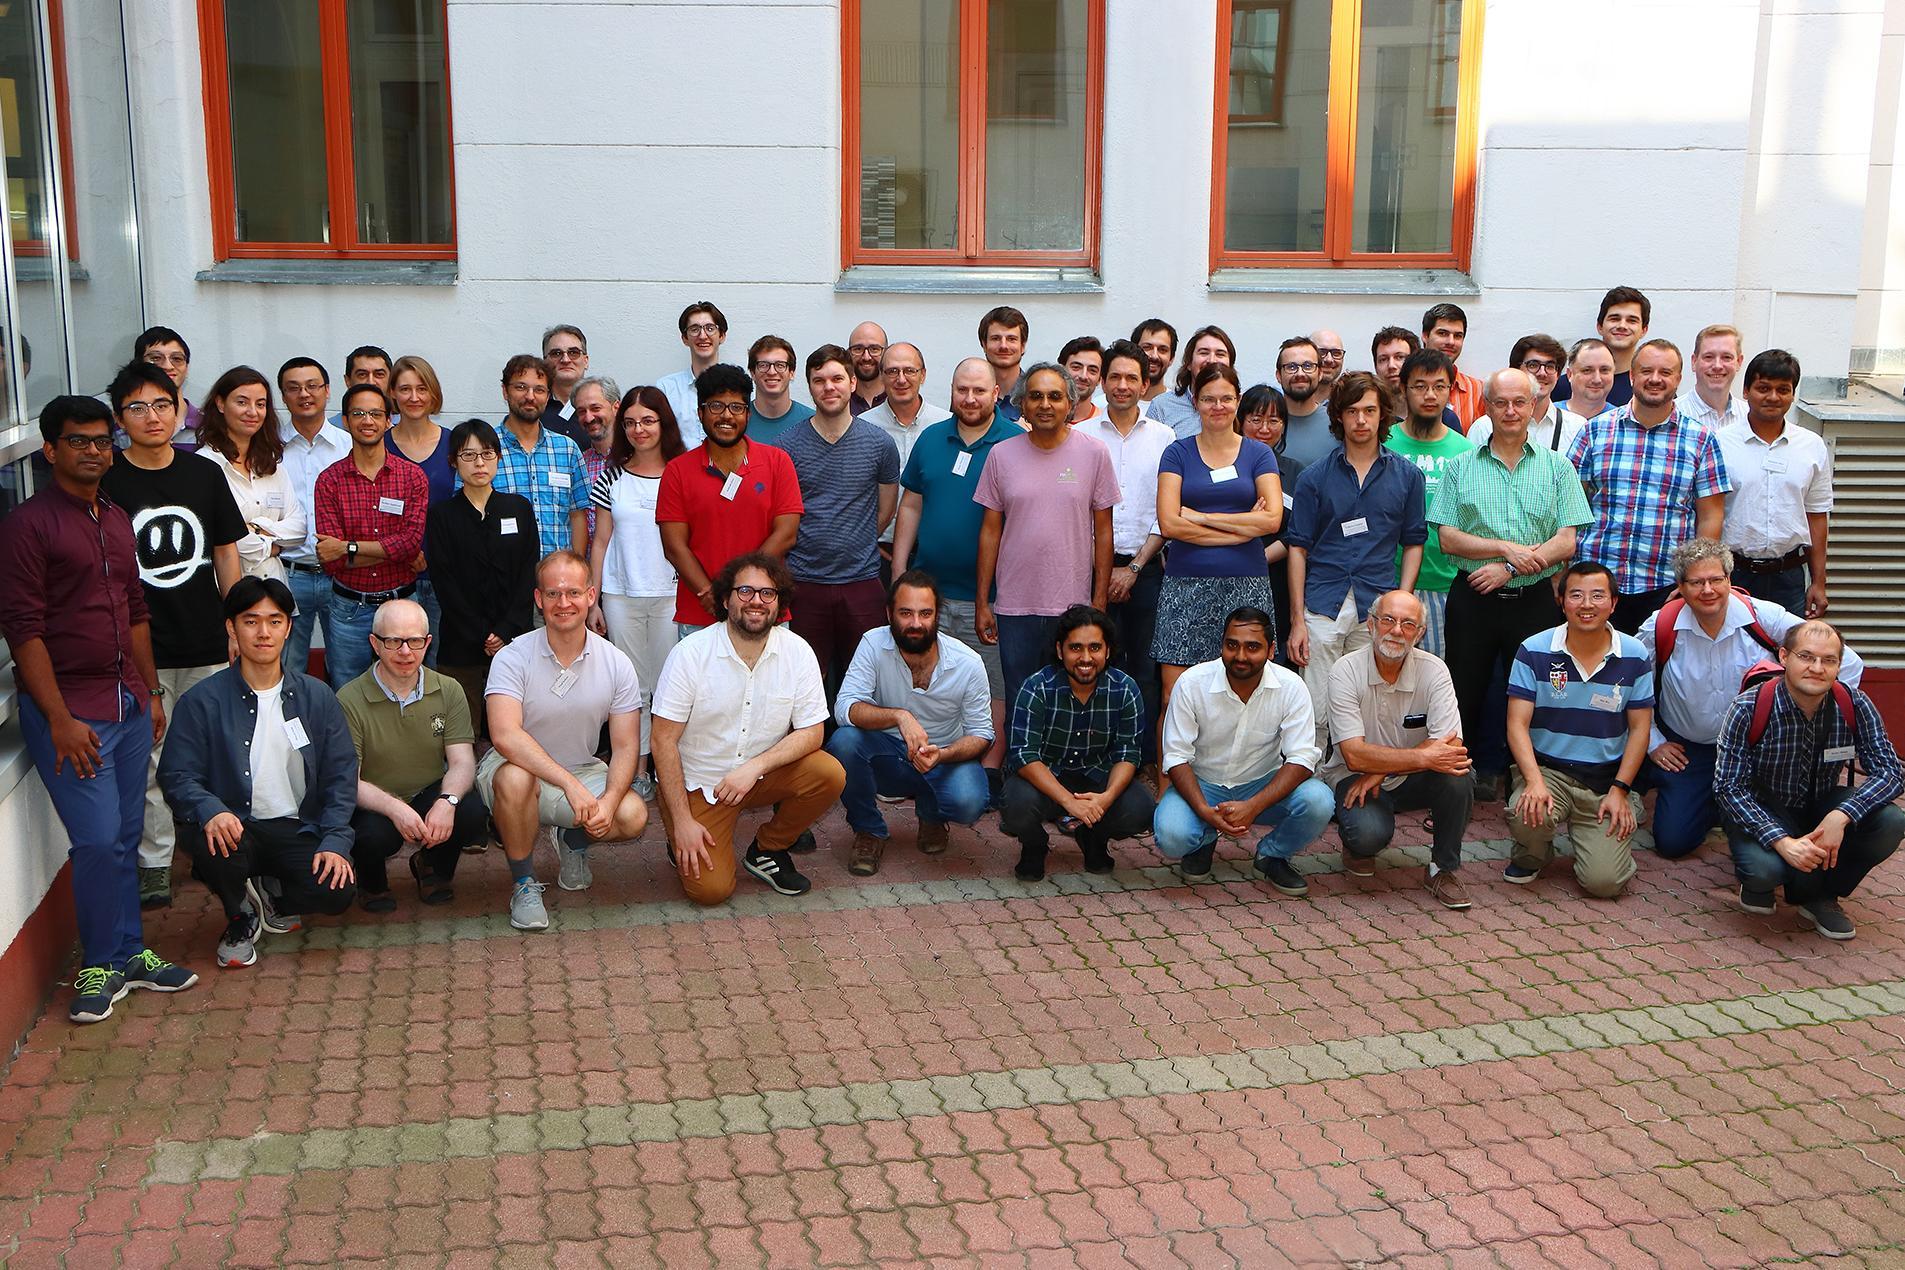 group photo of the workshop participants